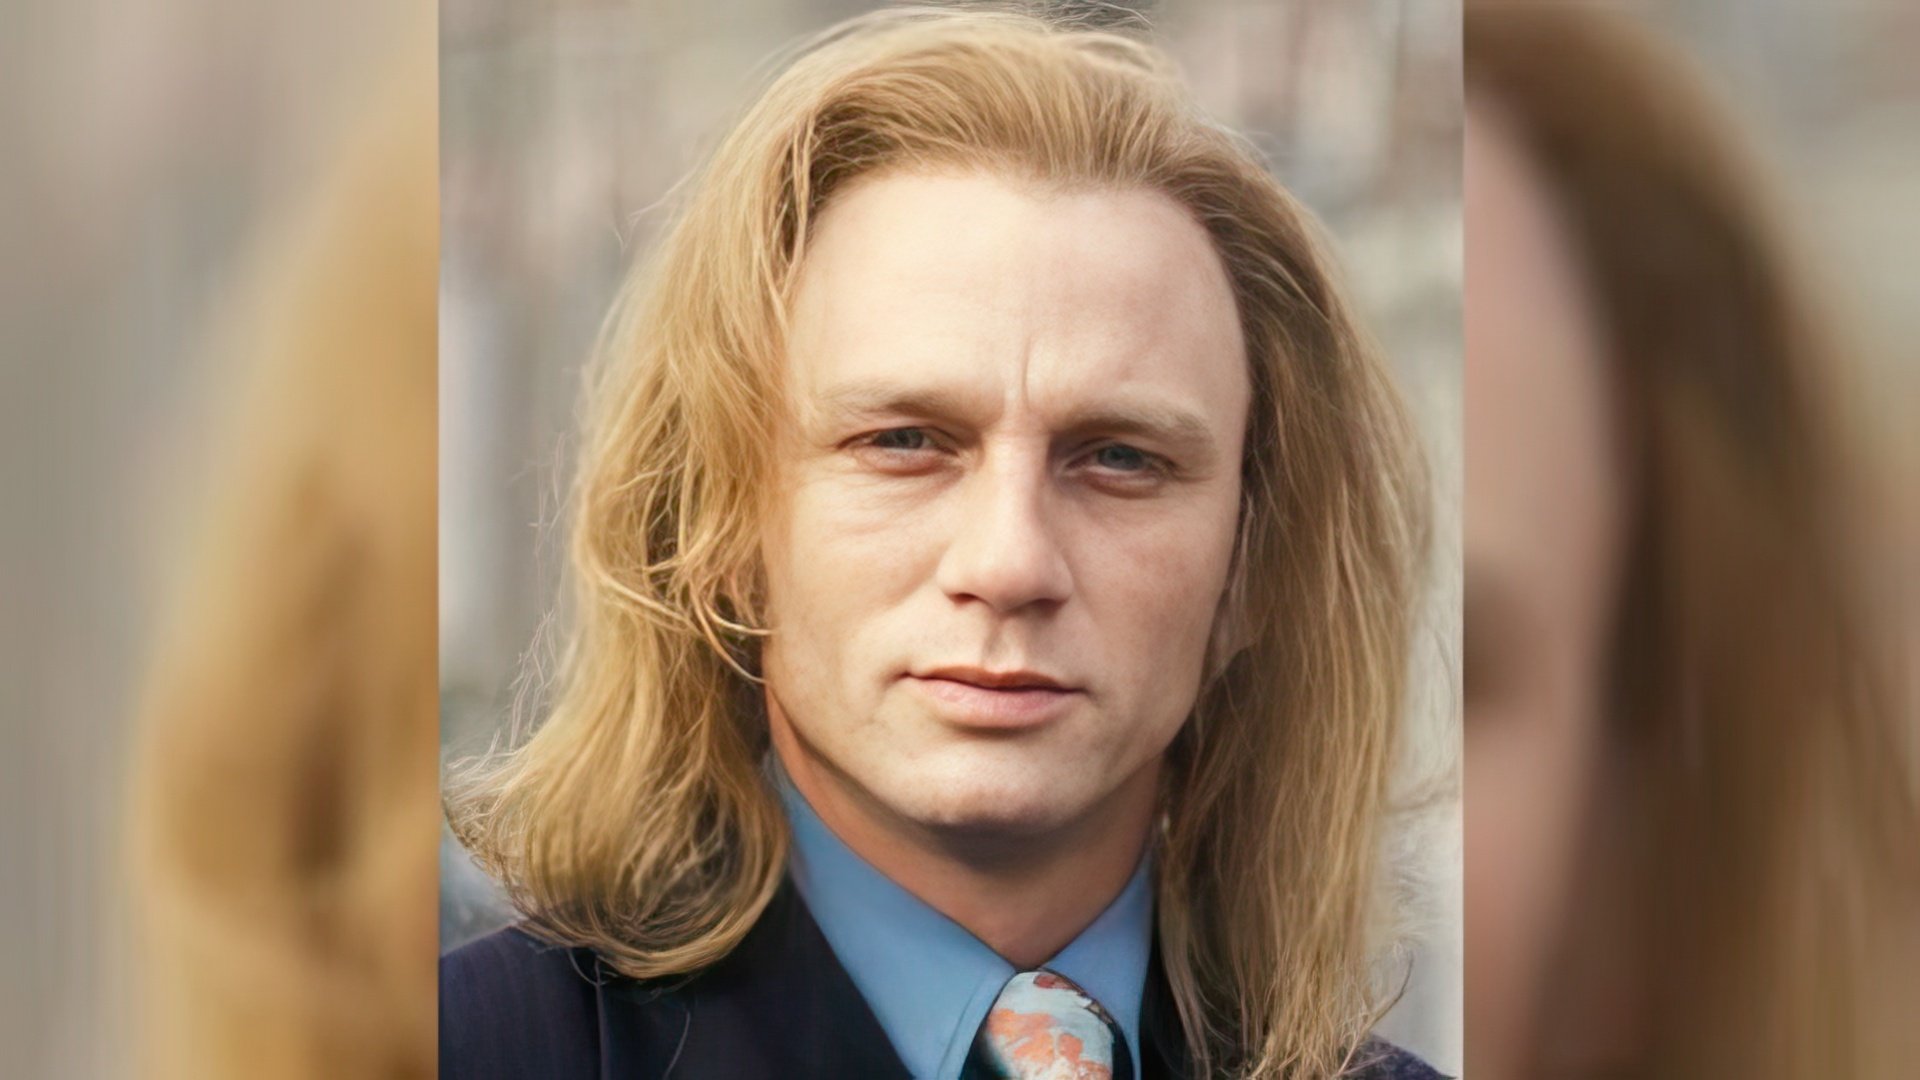 In his youth Daniel Craig wore long hair